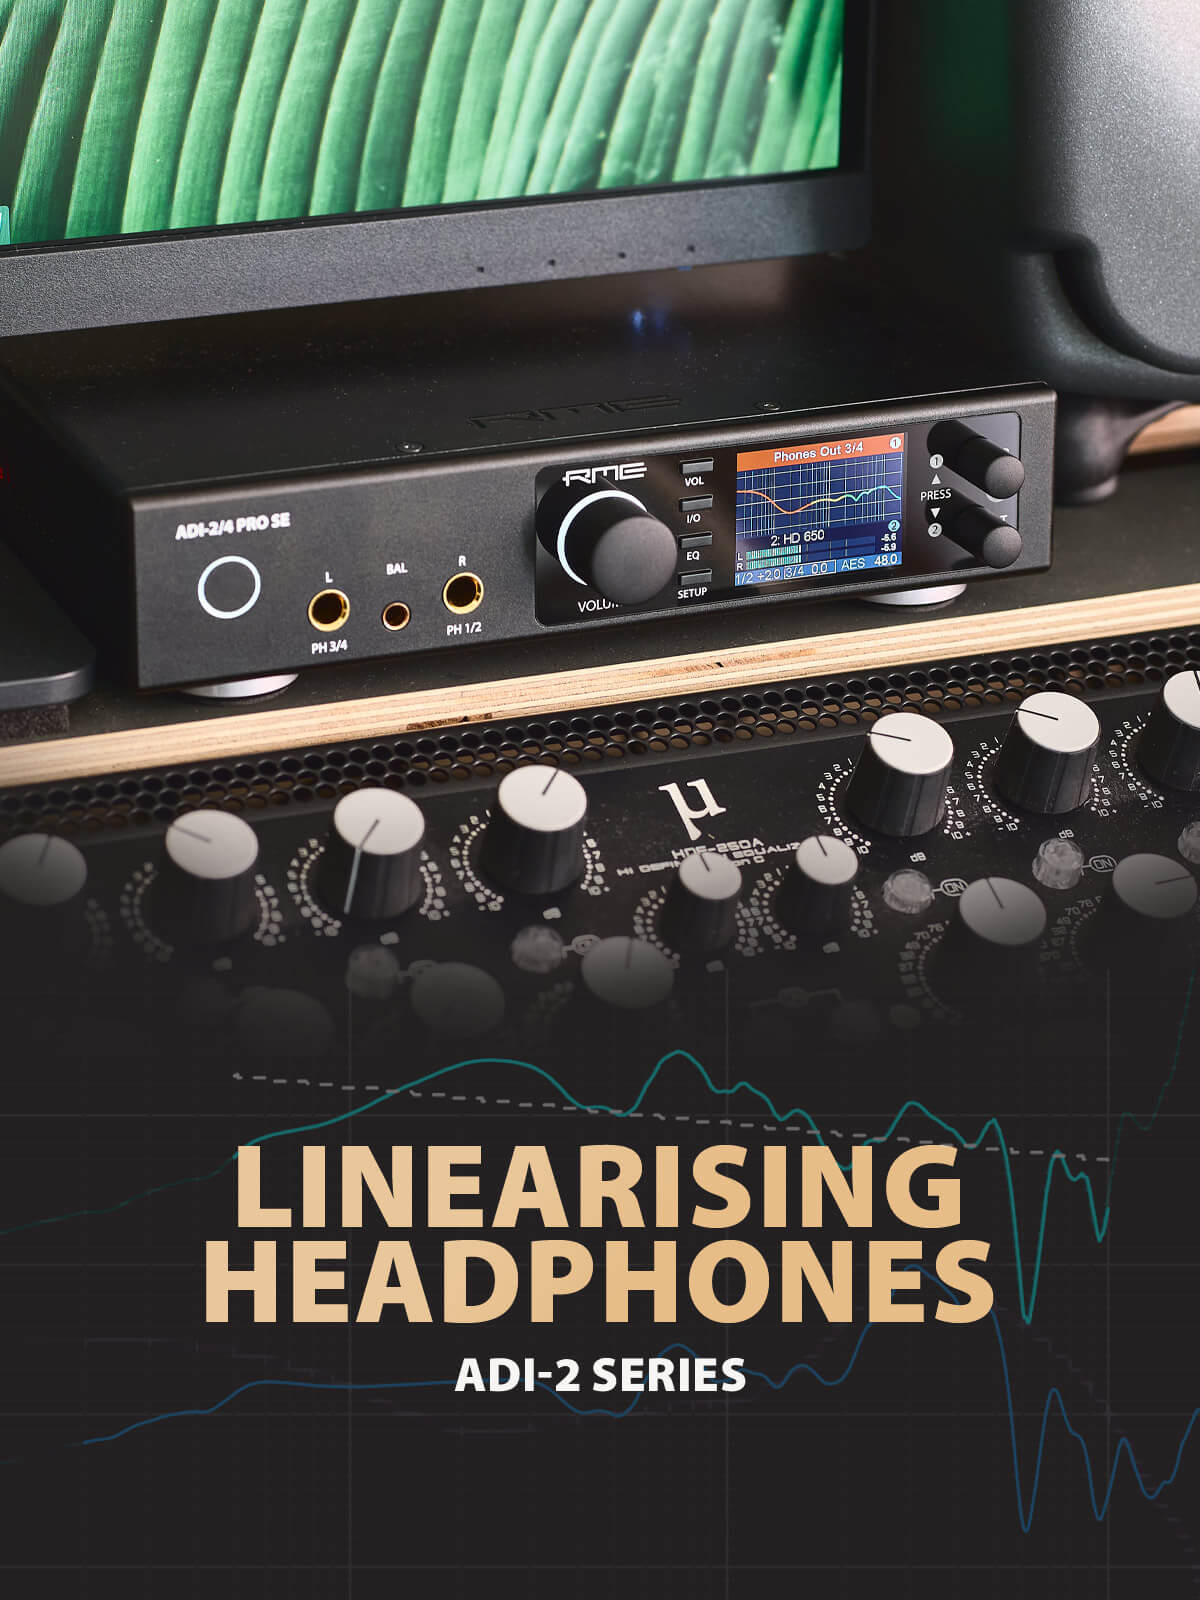 Linearising Headphones with the ADI-2 Series